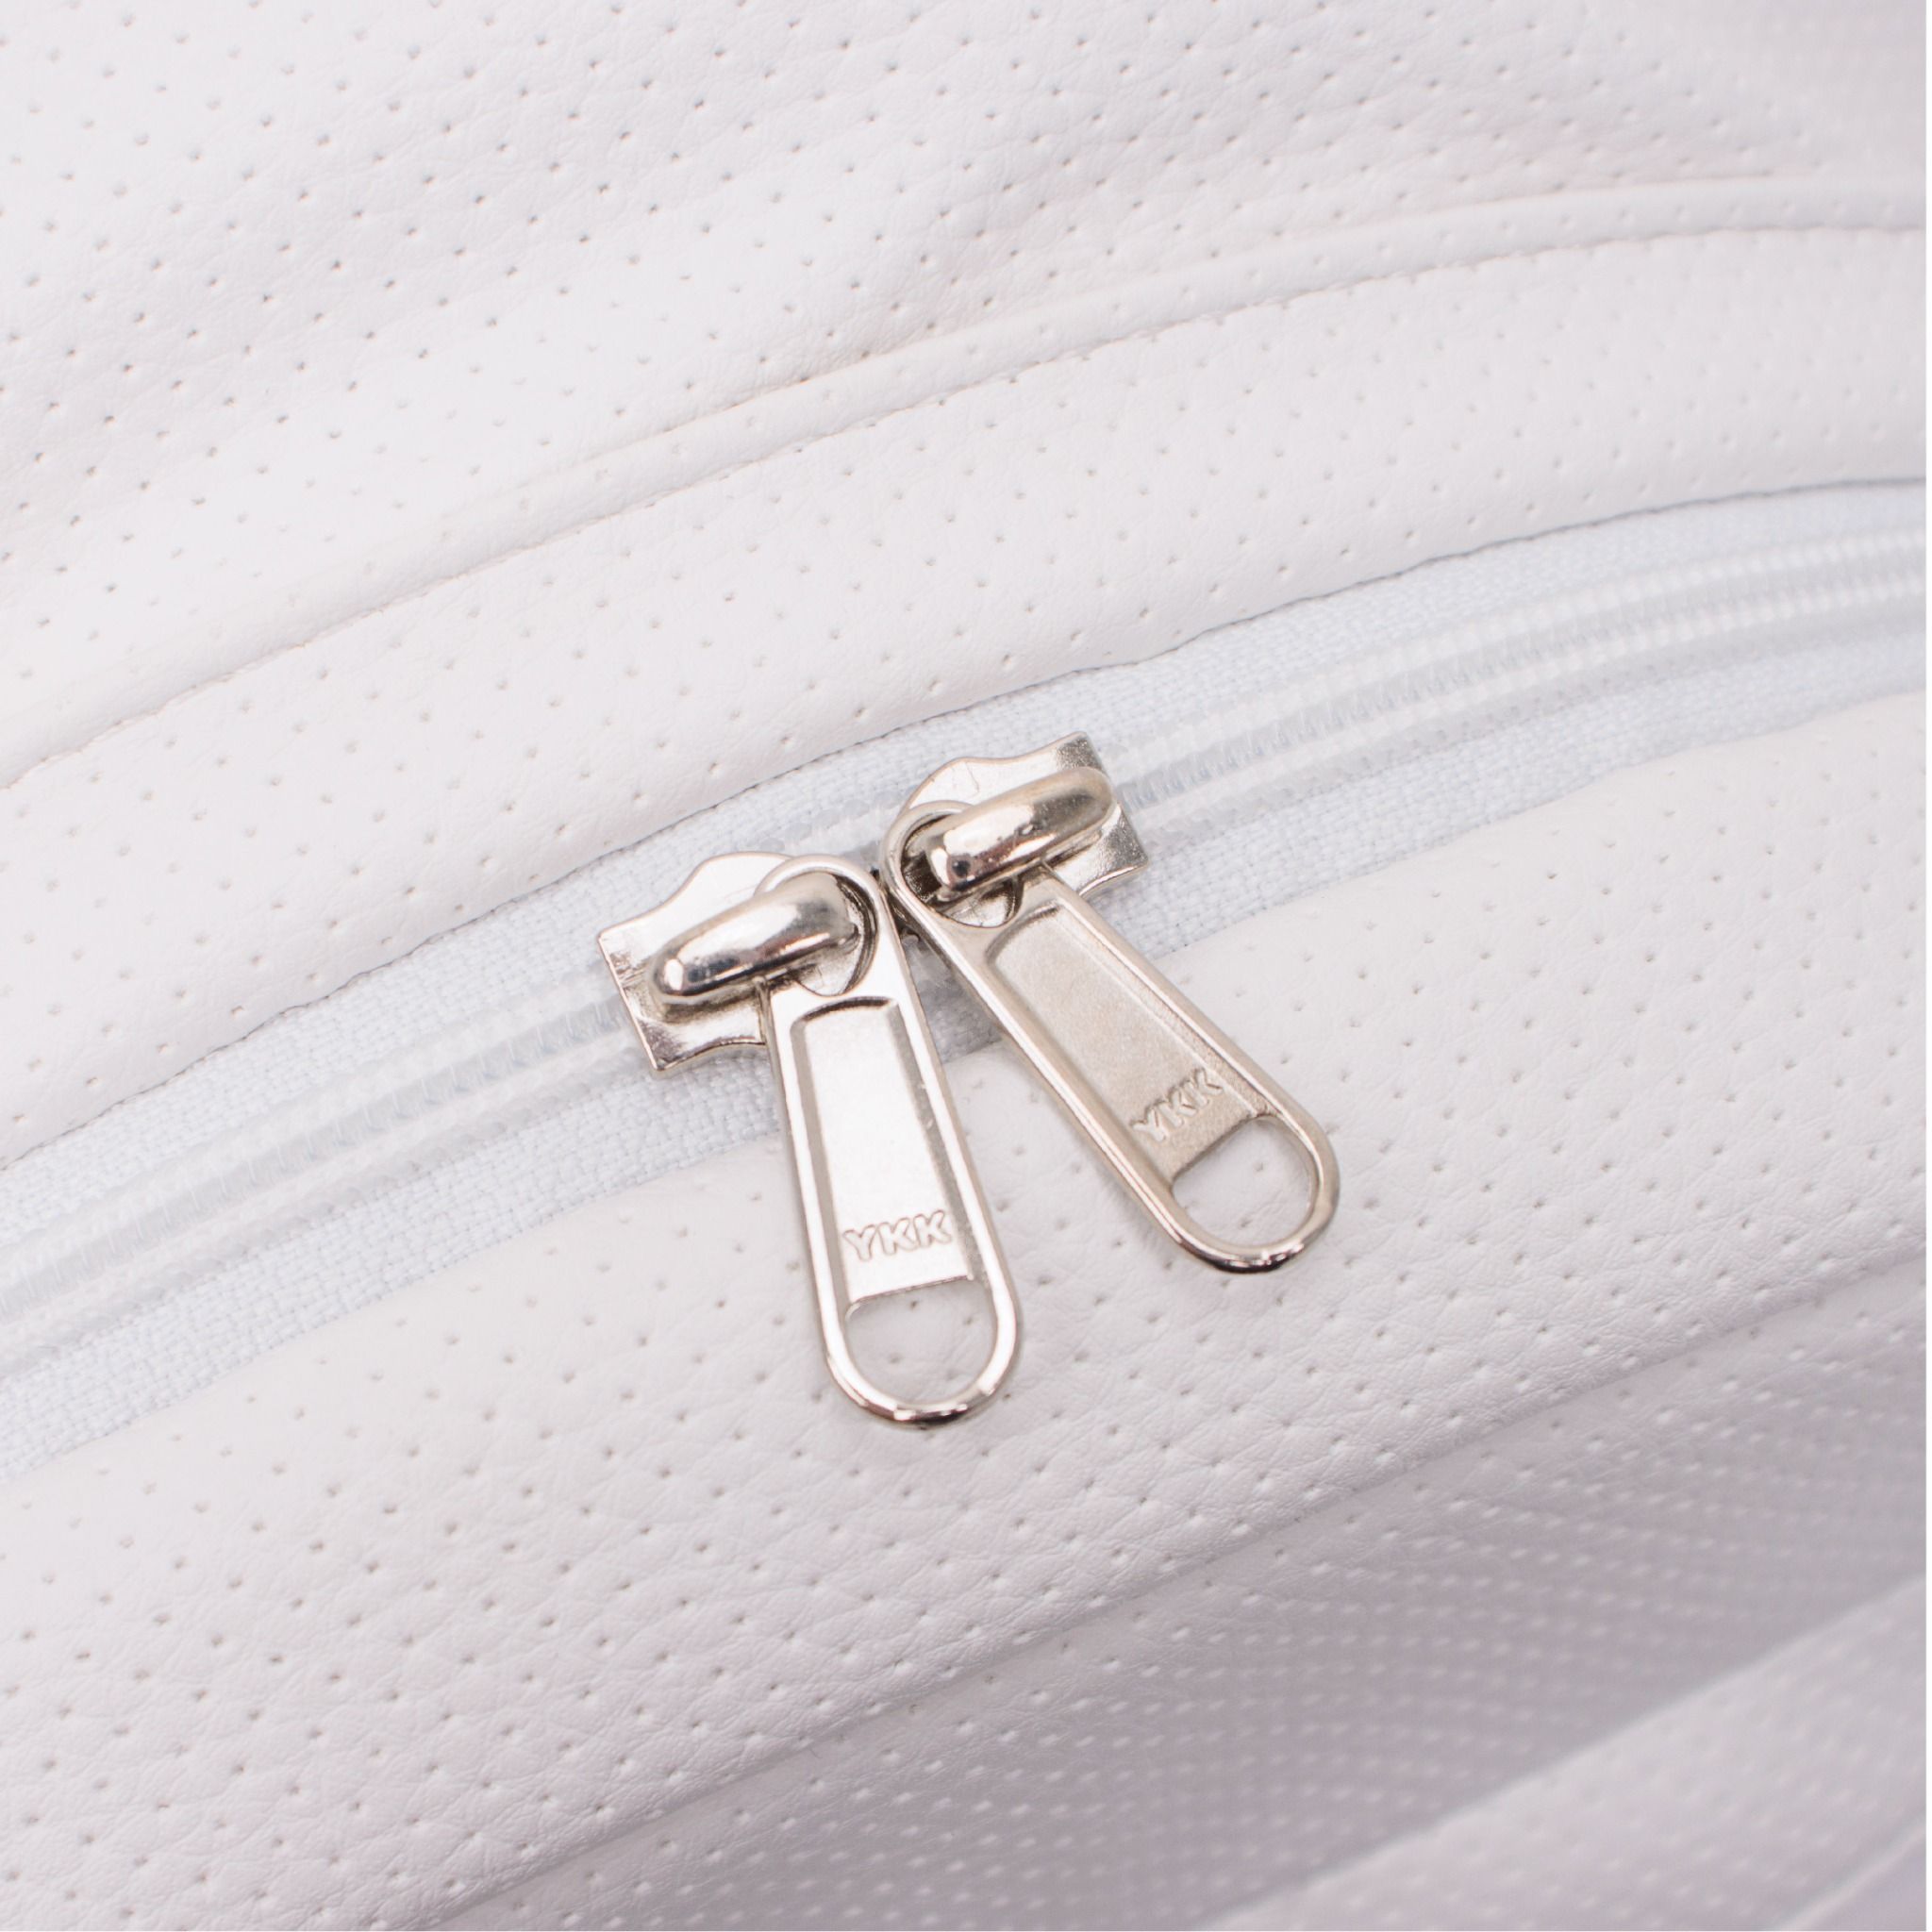  Multi Leather Backpack - White Dot 